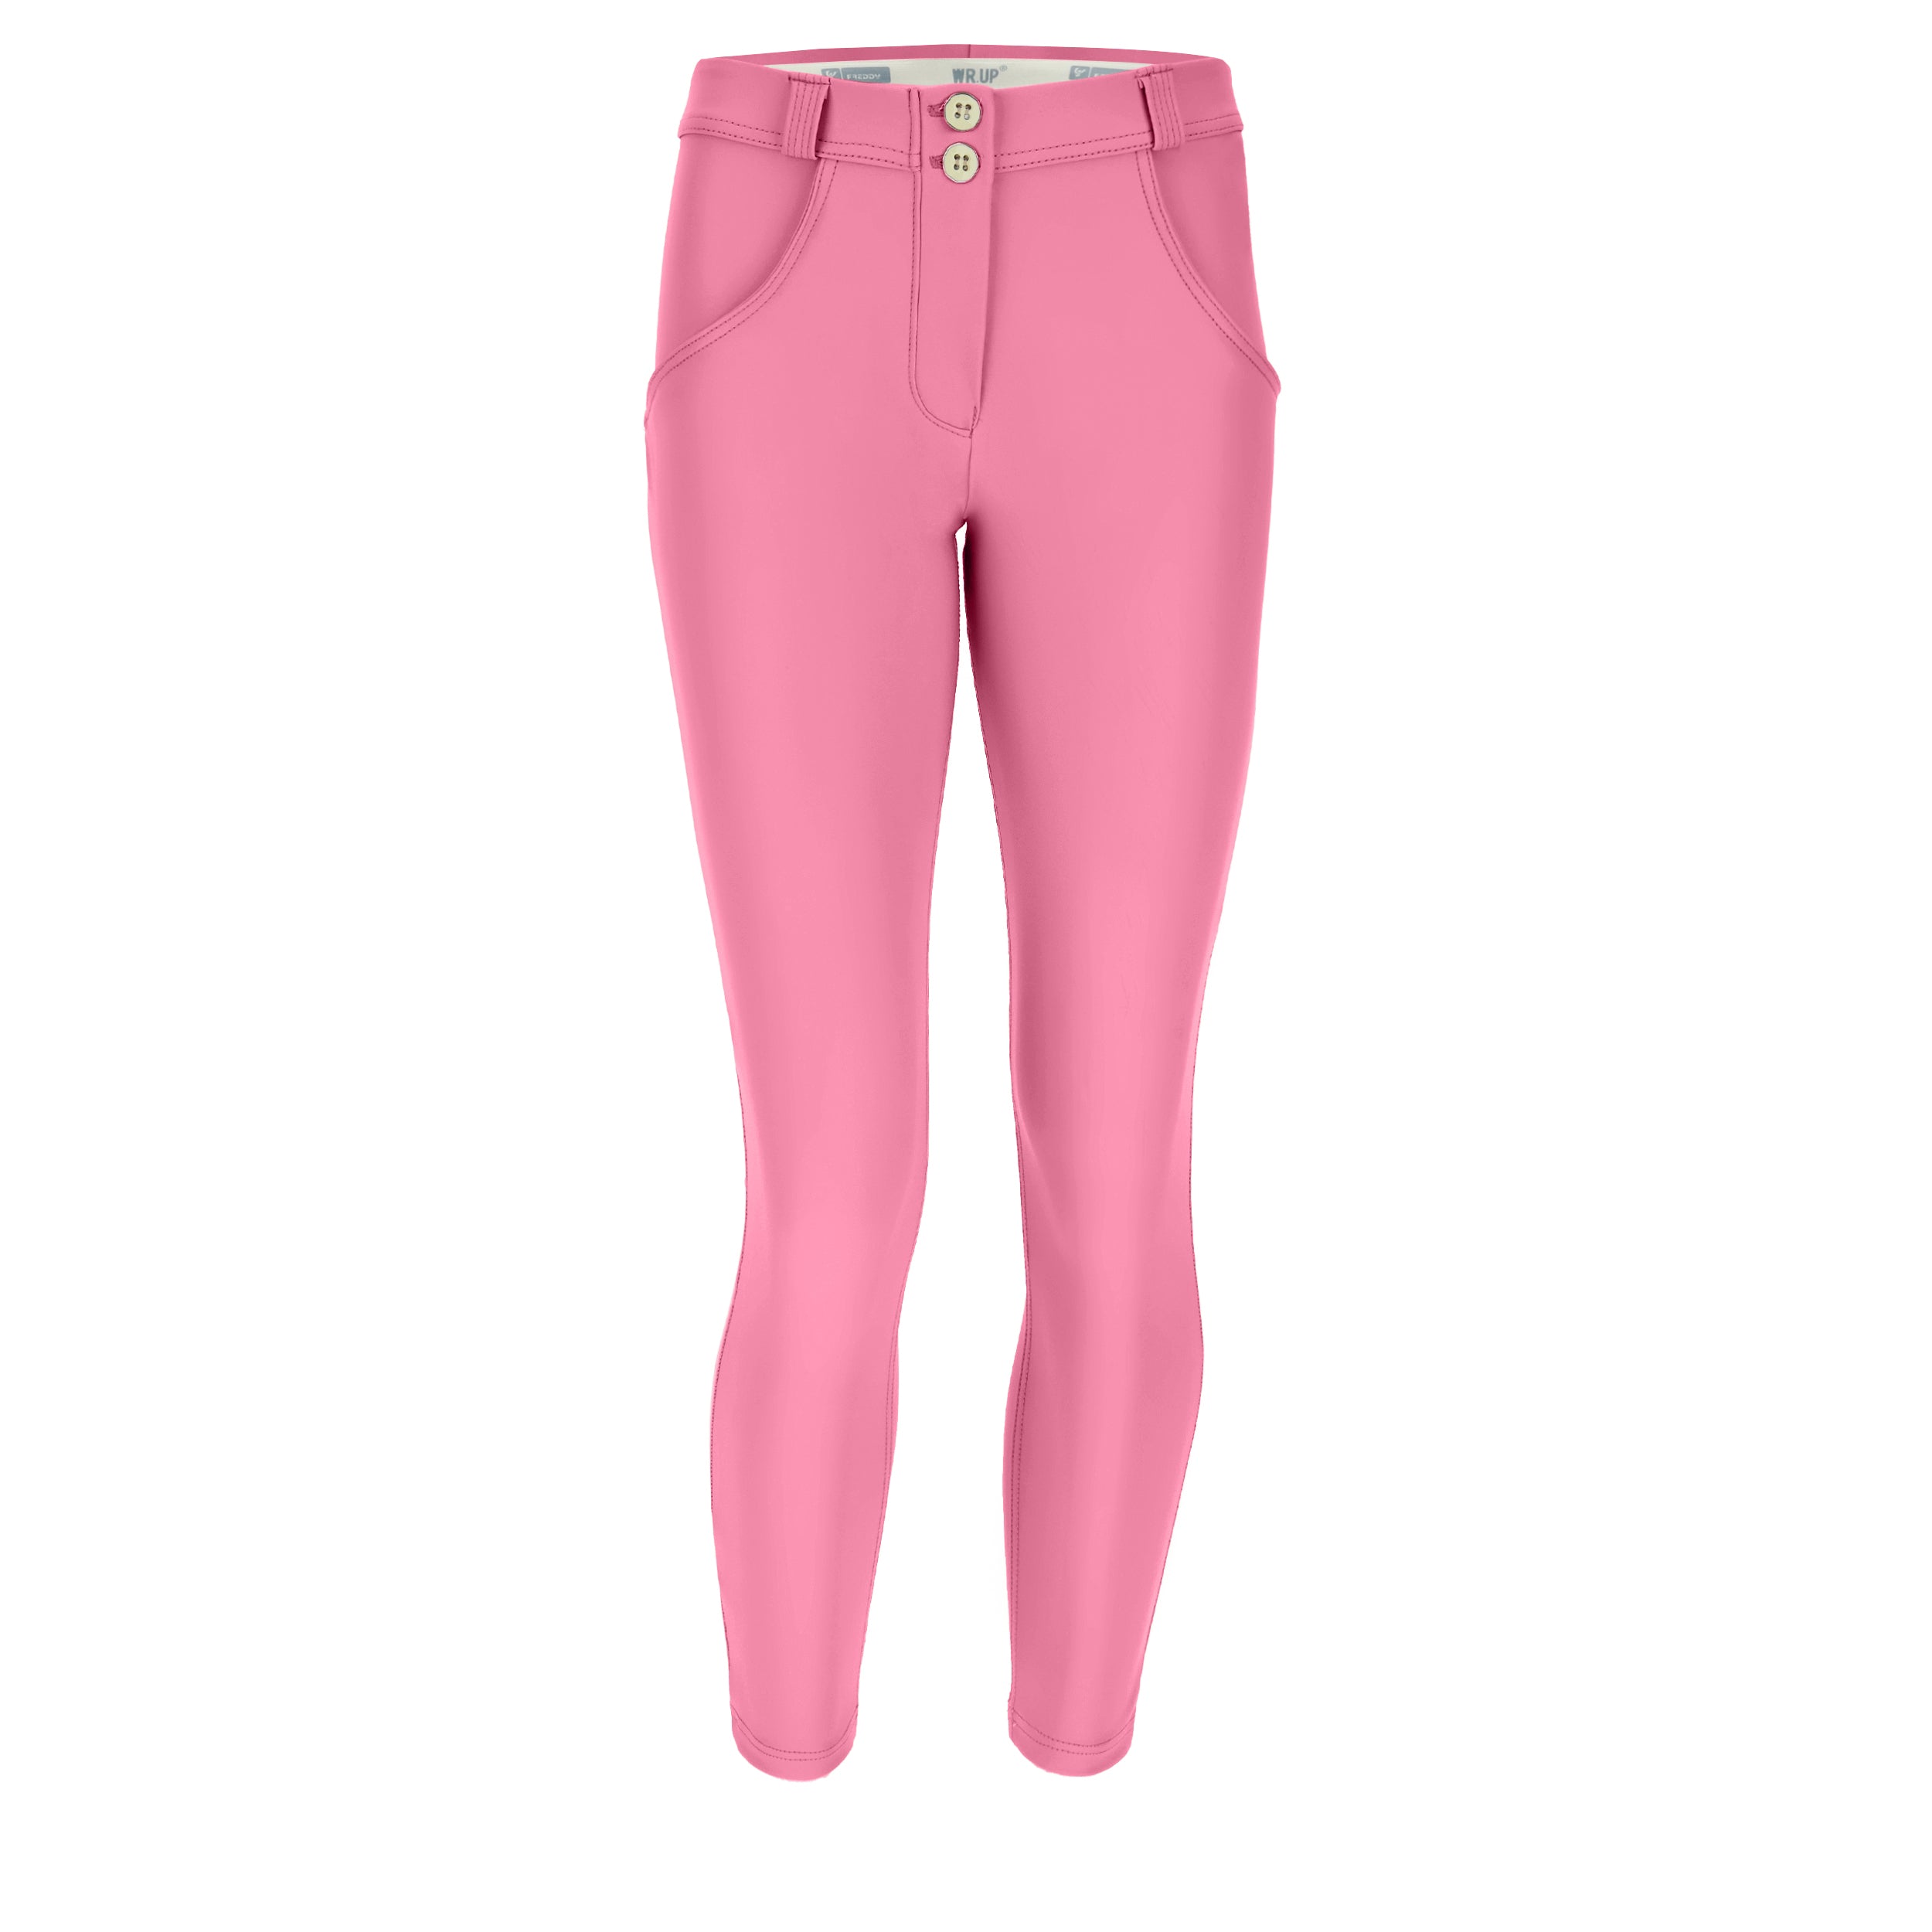 freddy shaping push up shapewear faux leather nep leer broek legging comfy stretch fitting enkel lengte hot pink roze trend